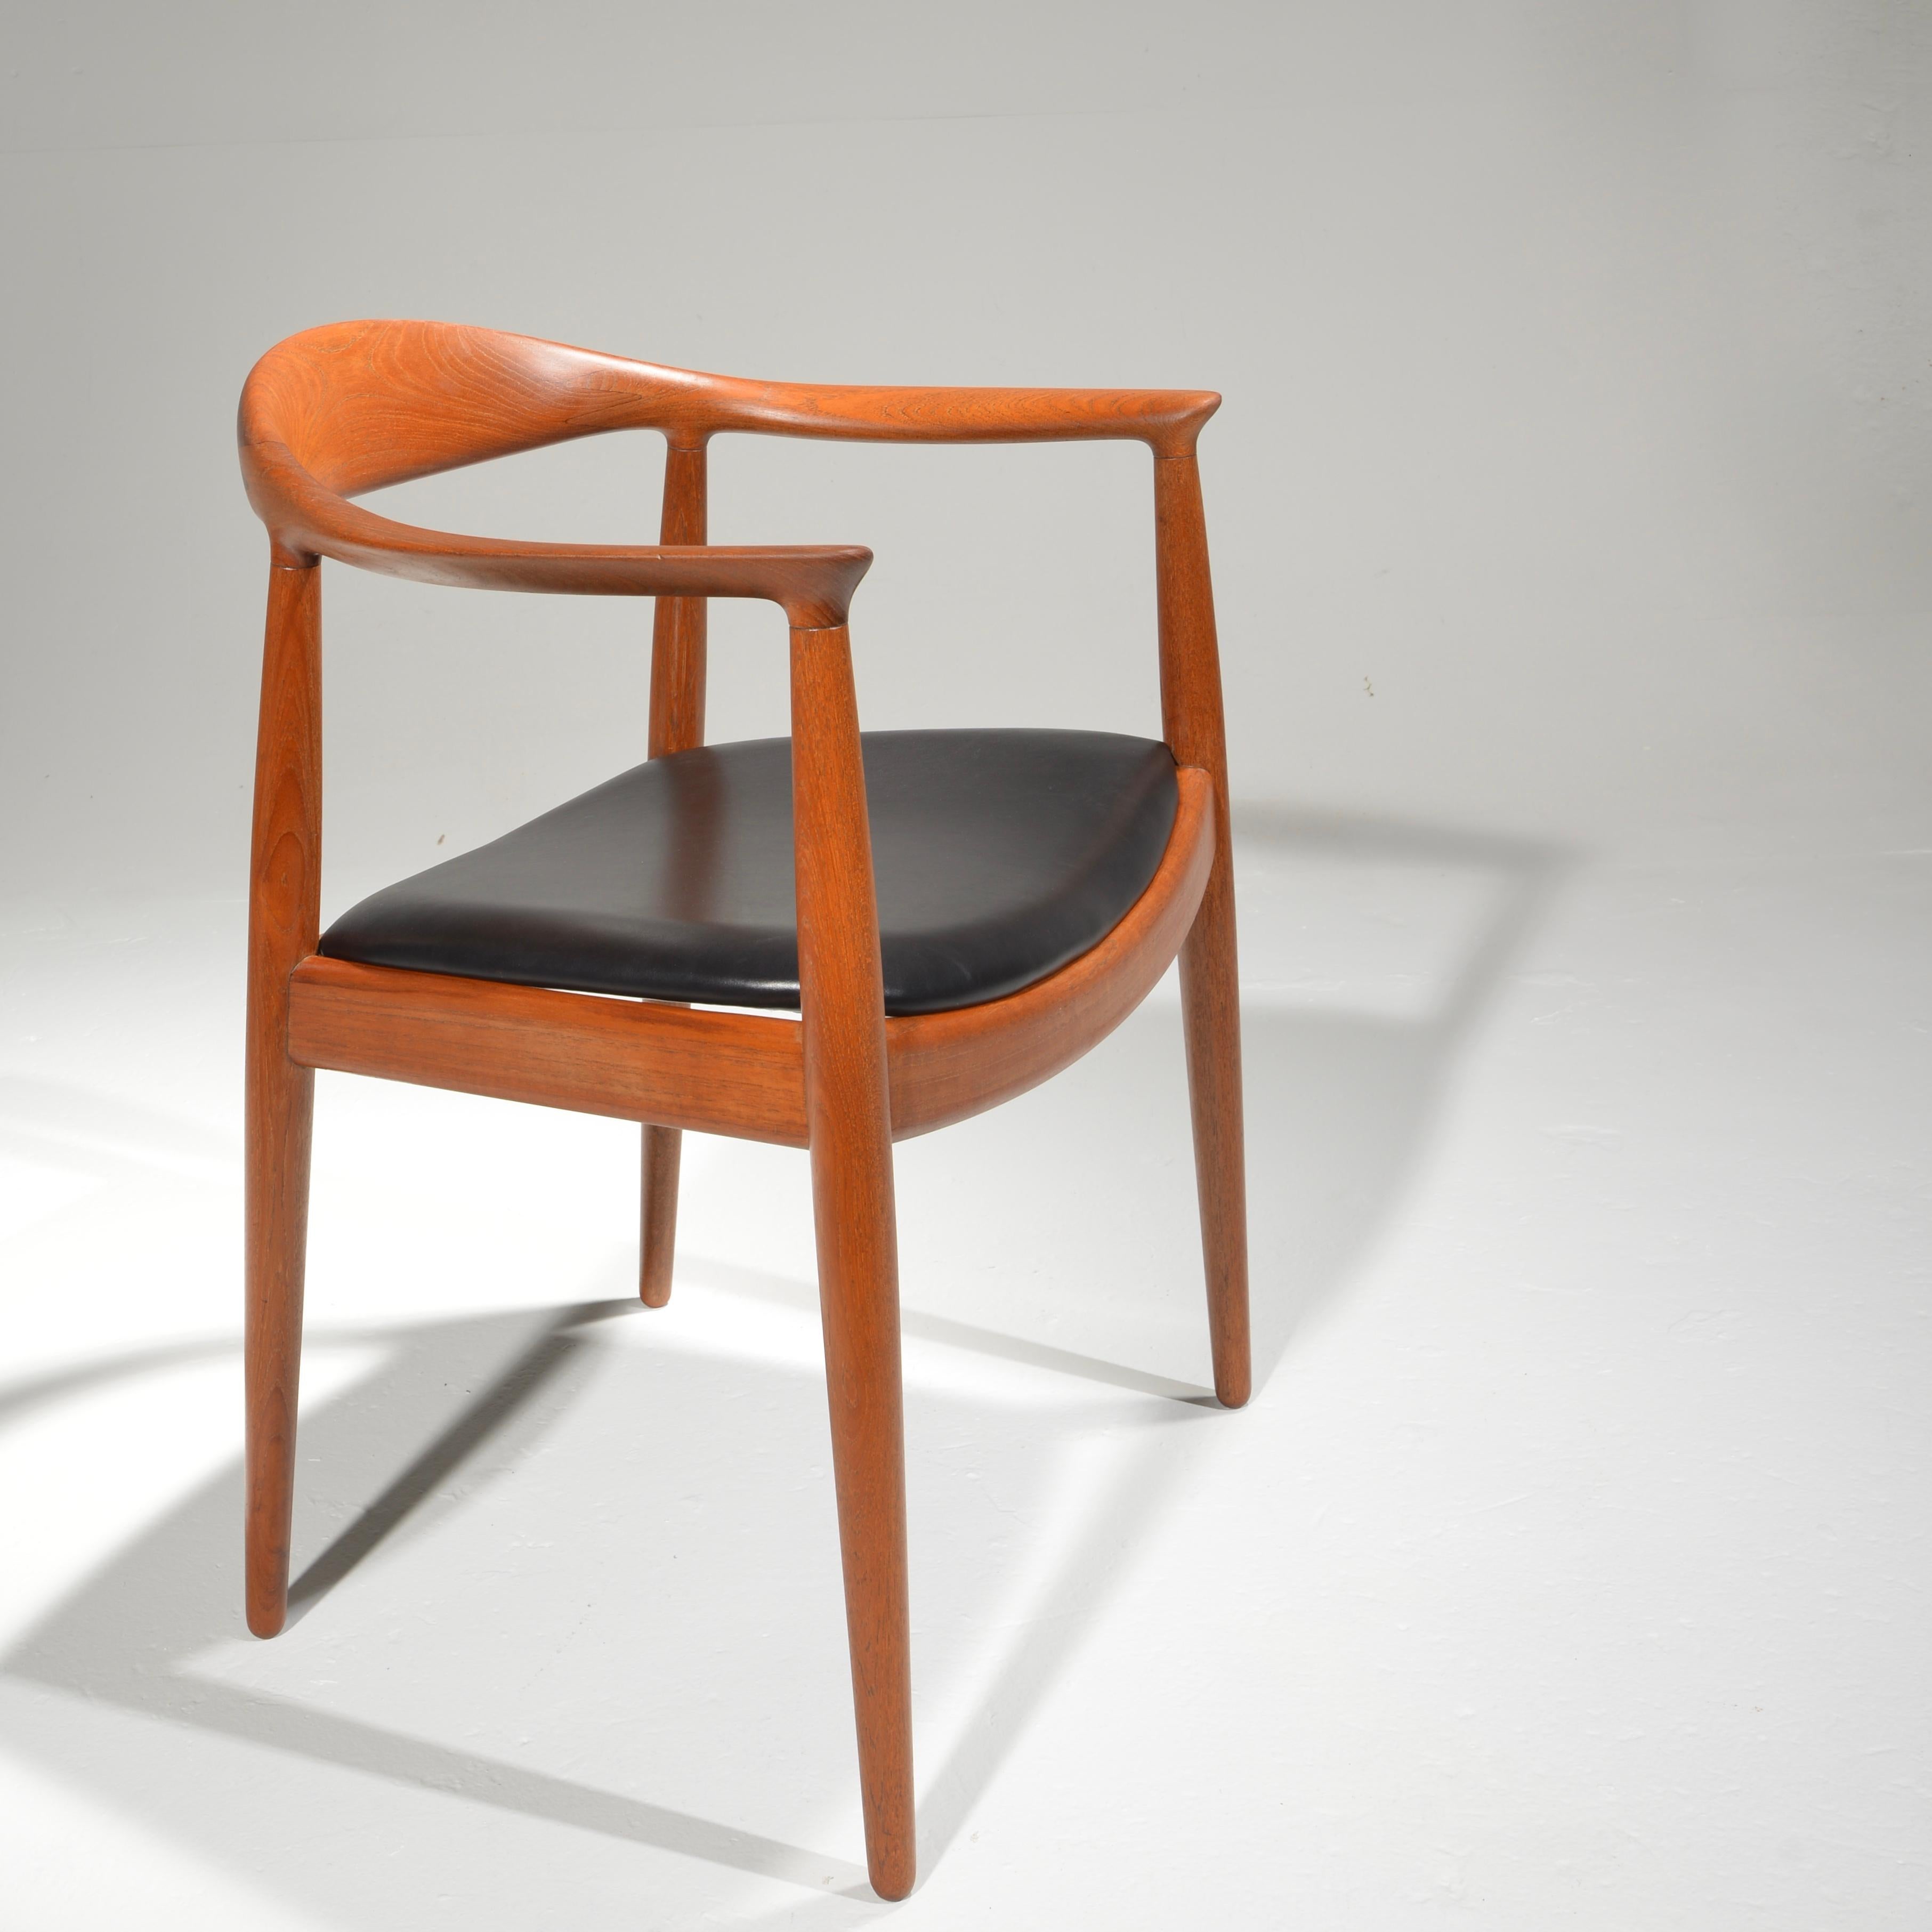 5 Hans Wegner for Johannes Hansen JH-503 Chairs in Teak and Leather For Sale 6